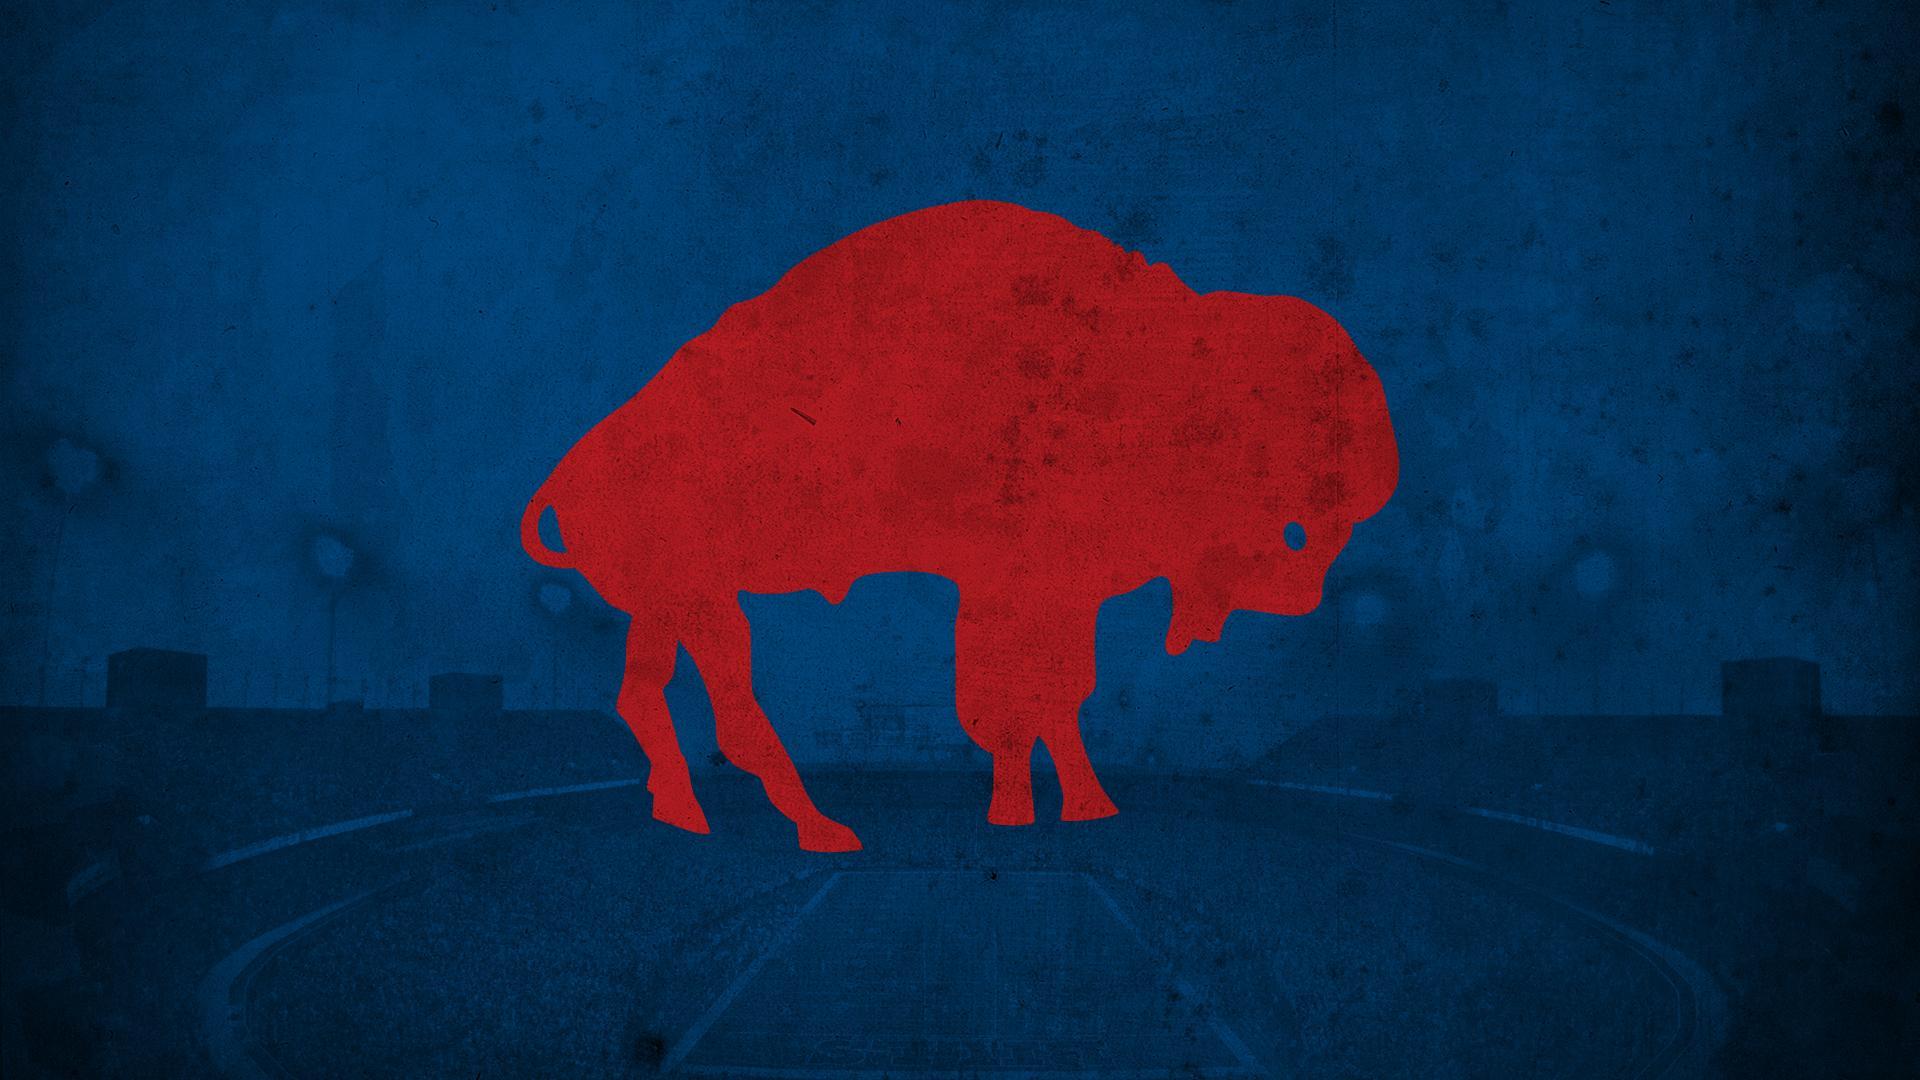 Buffalo Bills Wallpaper Image Photo Picture Background